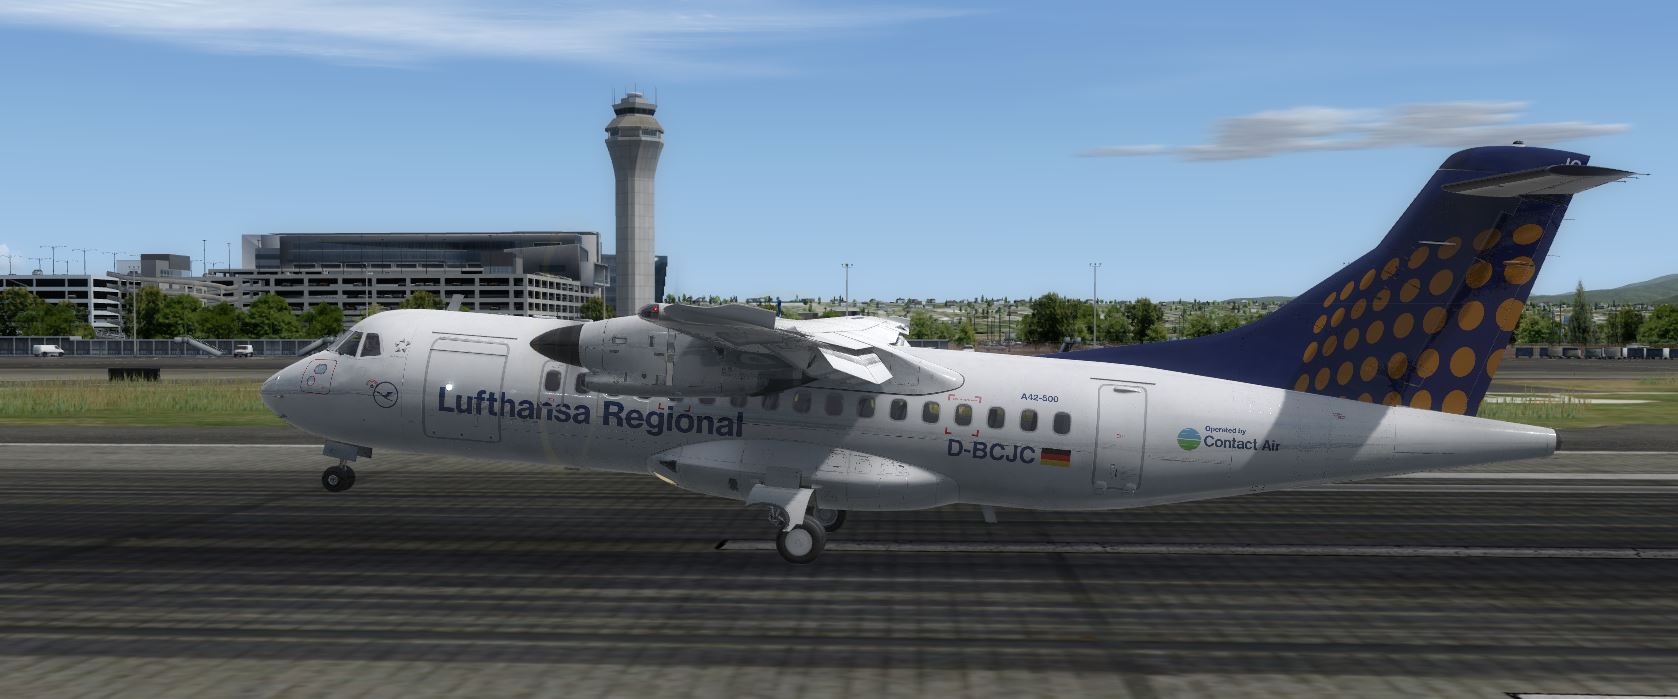 ATR42-500 Lufthansa-4493 